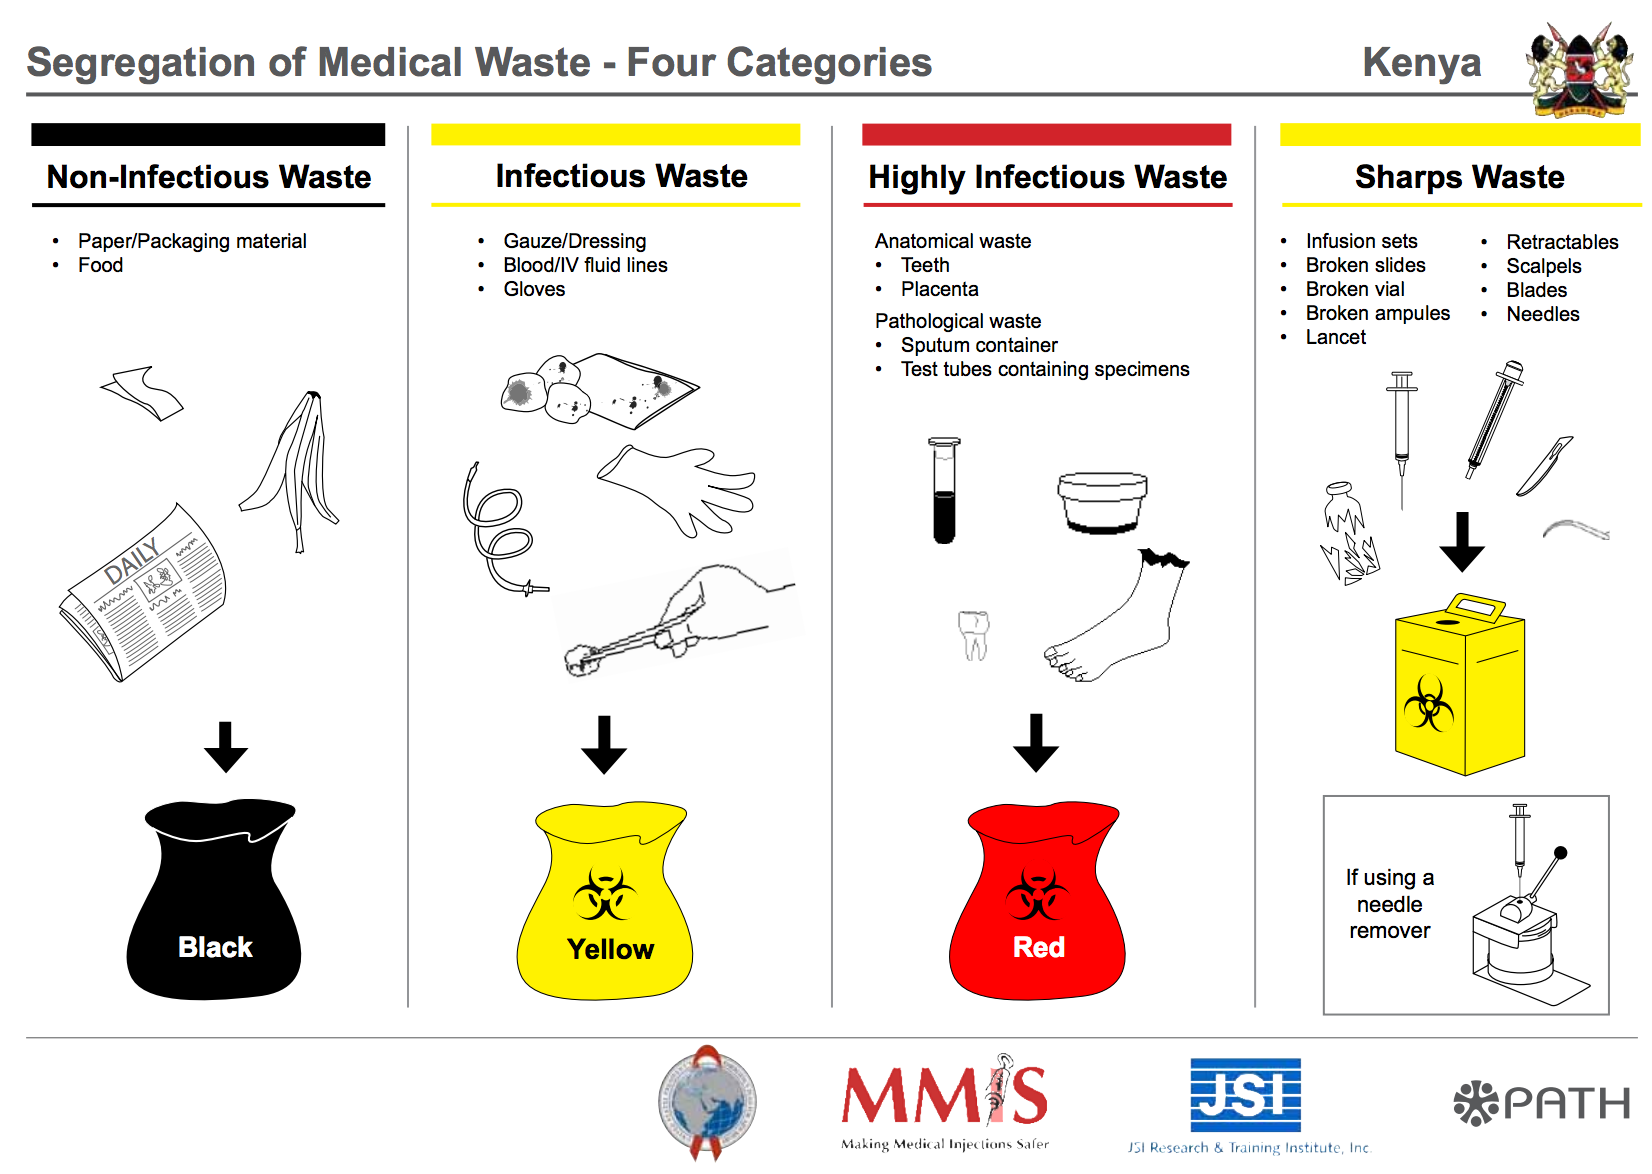 Ségrégation des déchets médicaux Kenya Job Aid